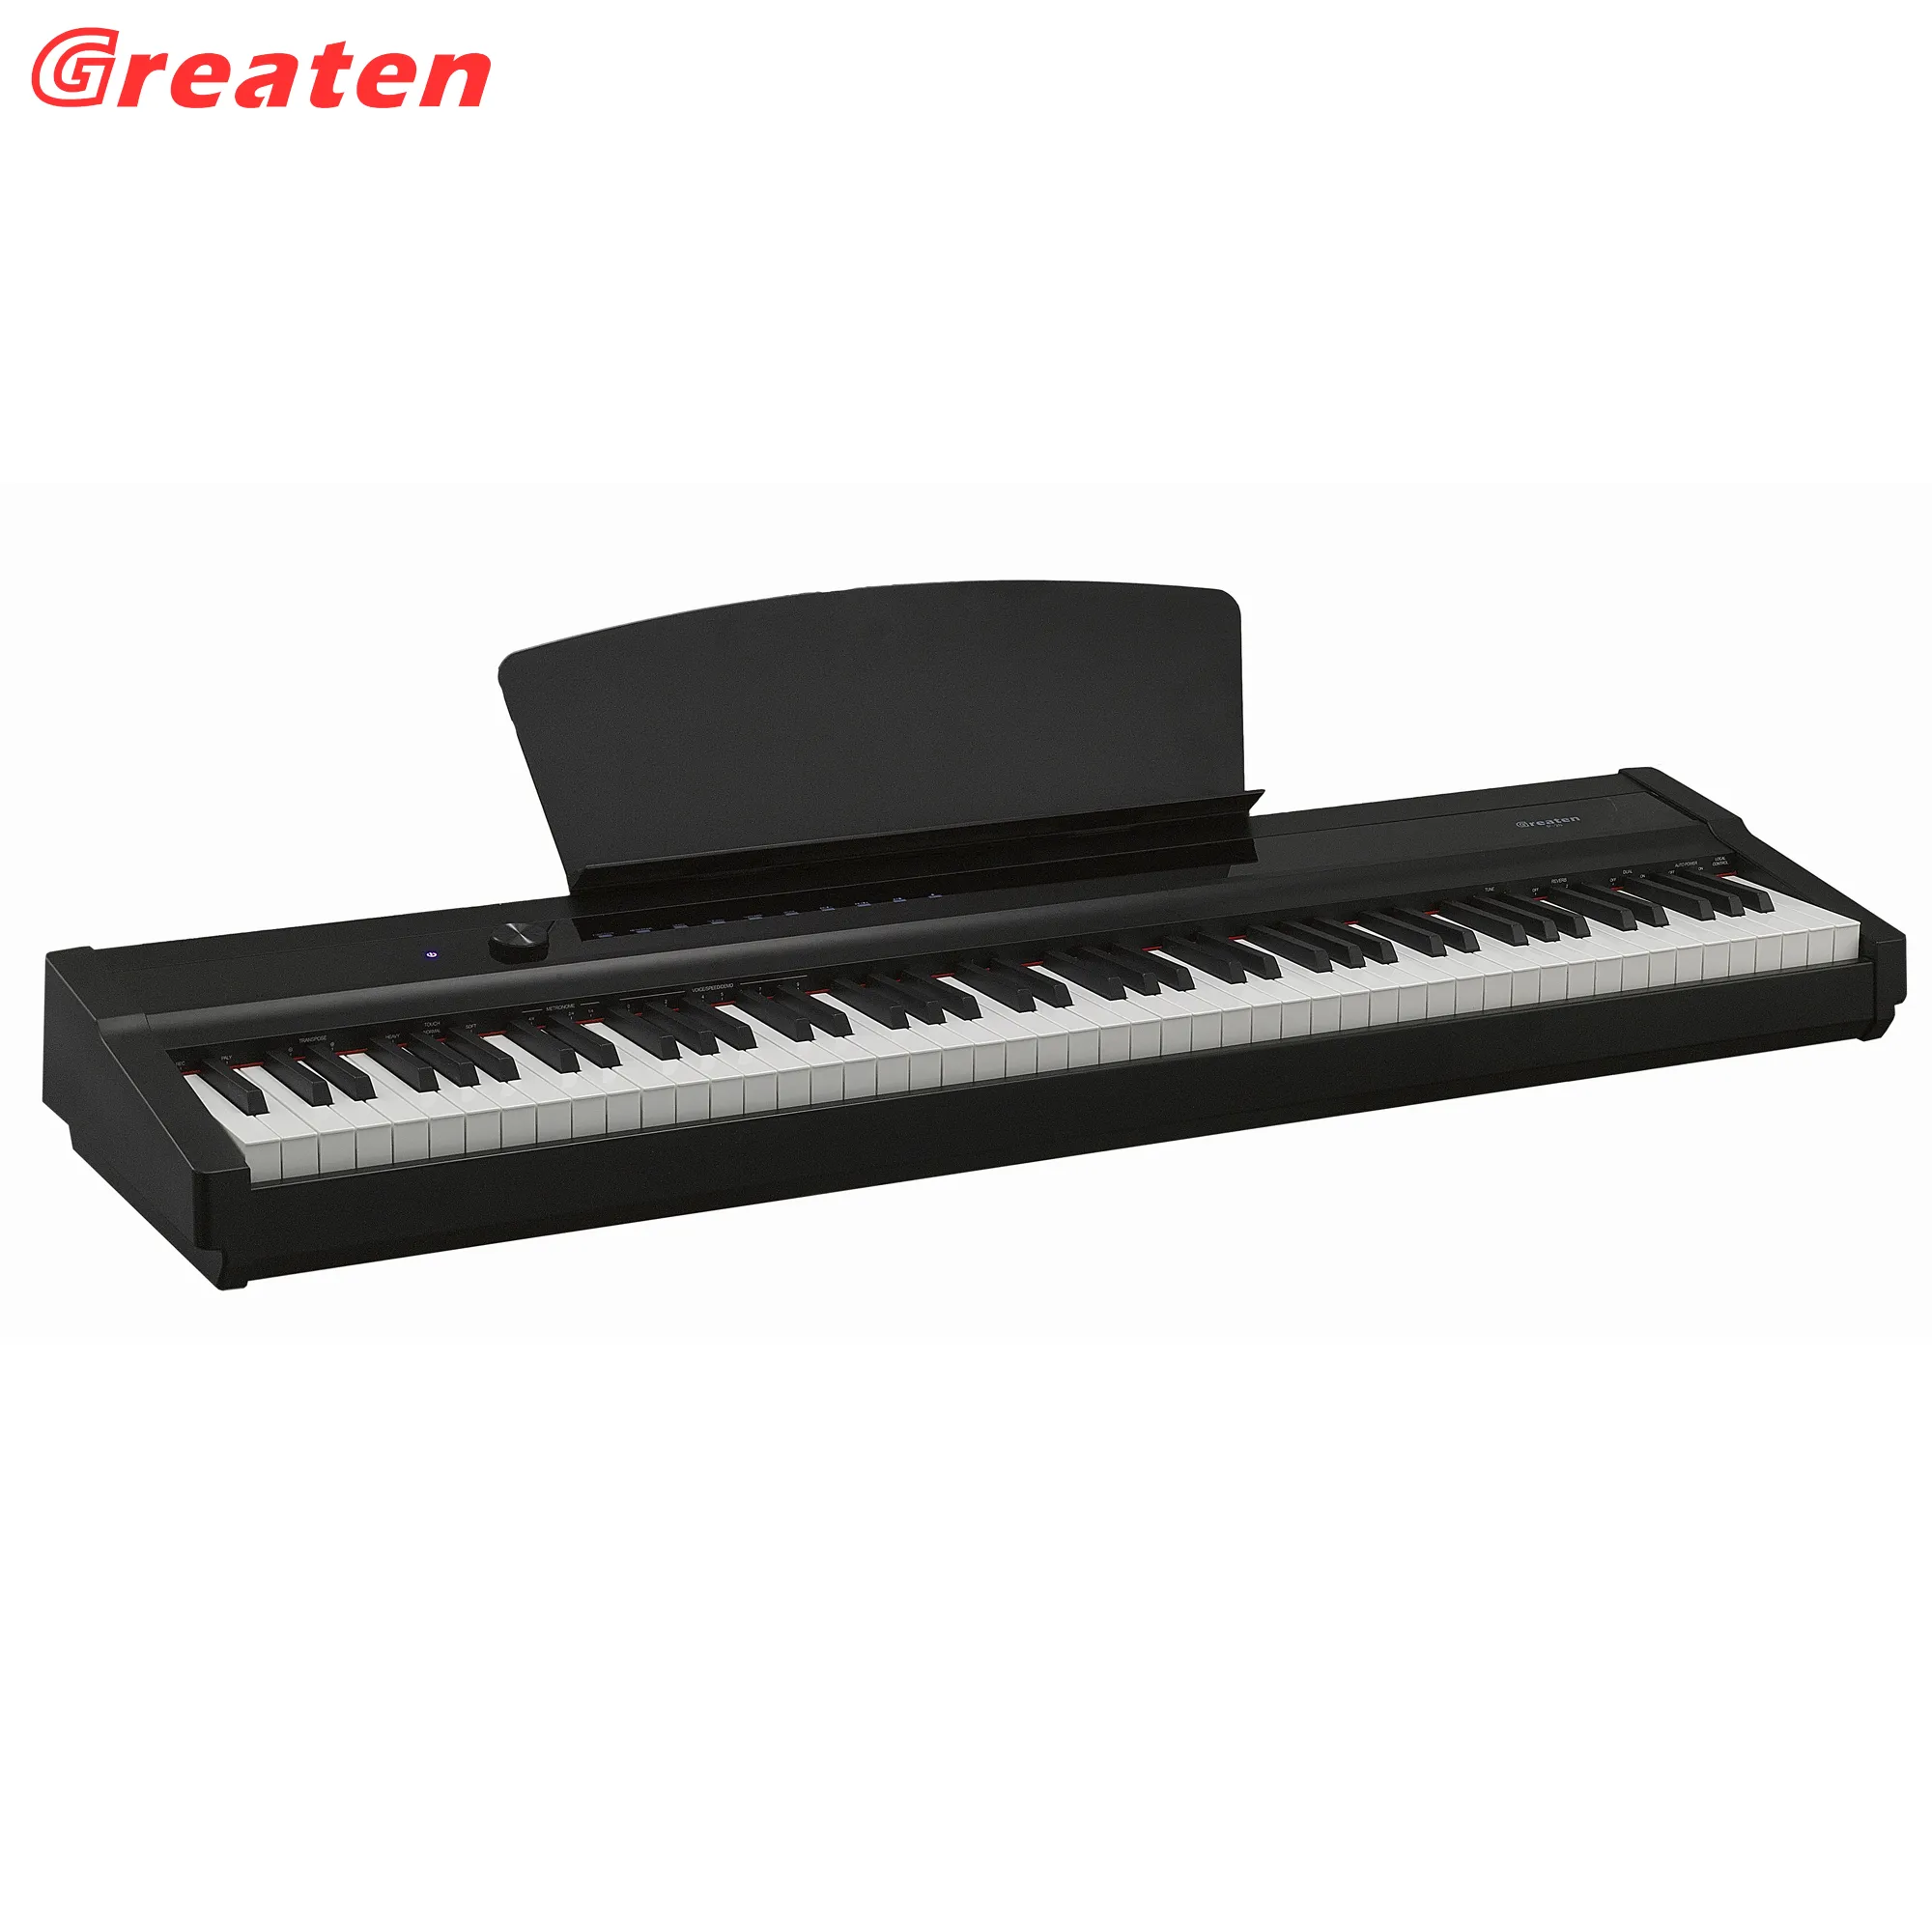 मिडी इलेक्ट्रॉनिक पियानो कीबोर्ड, डिजिटल पियानो हथौड़ा कार्रवाई पोर्टेबल, टच स्क्रीन, 88 चाबियाँ | सर्वश्रेष्ठ विक्रेता | P-20